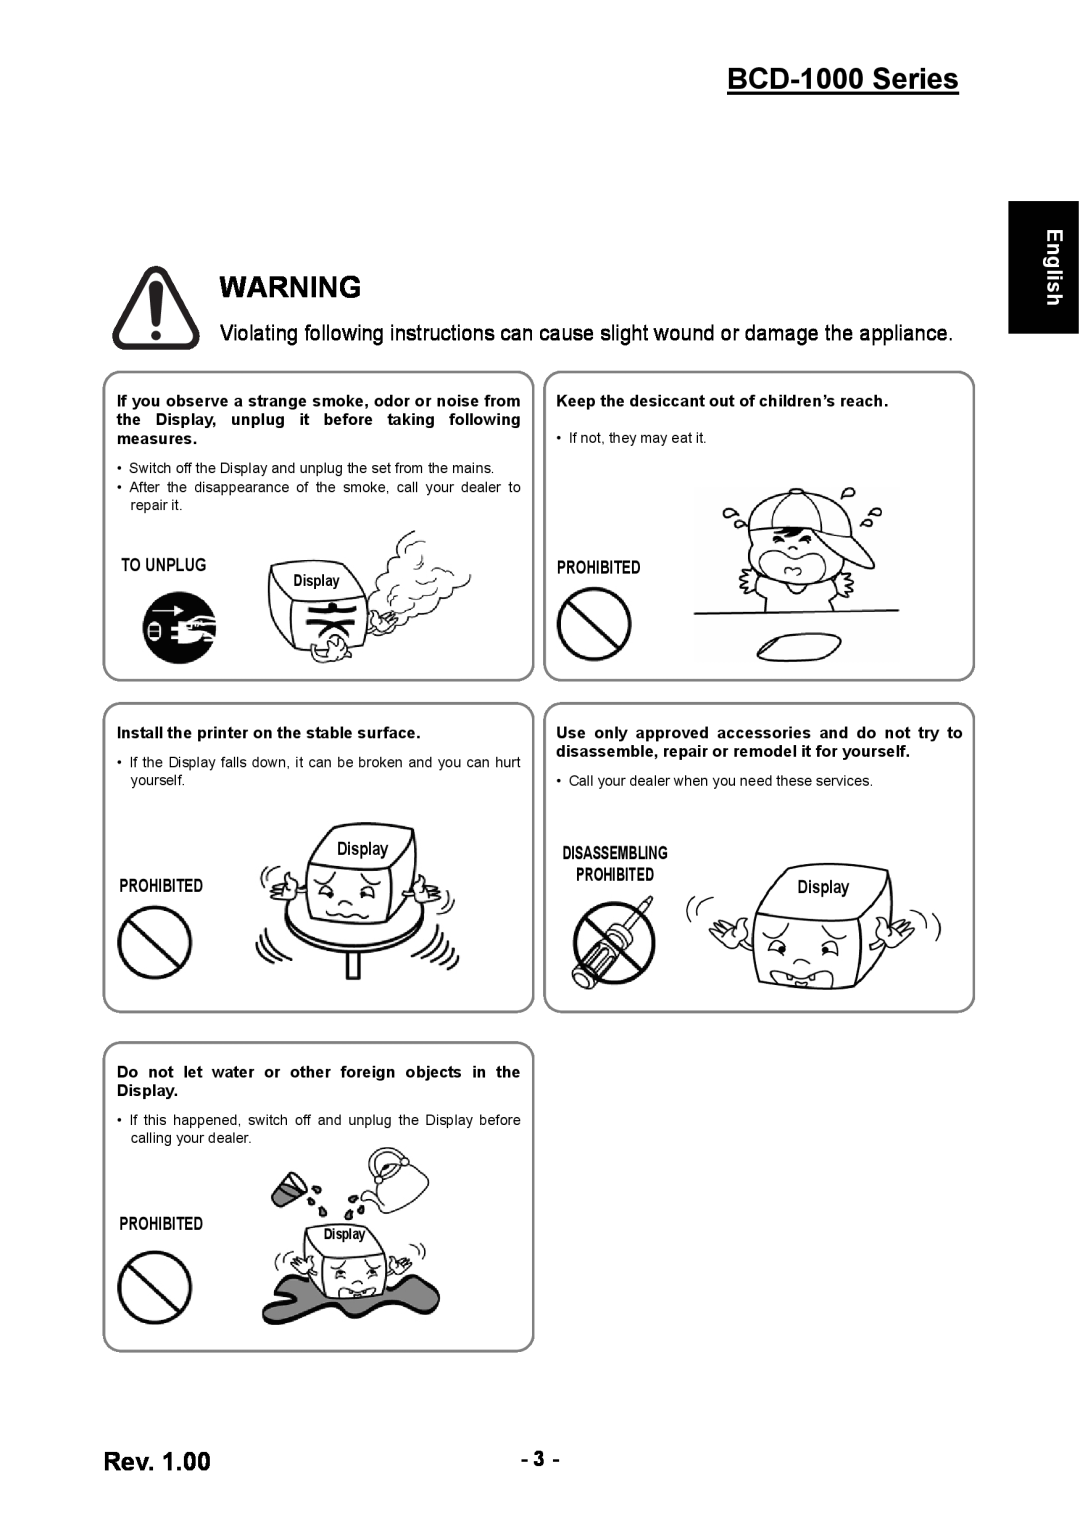 Samsung user manual BCD-1000 Series, English, To Unplug, Prohibited, PROHIBITEDDisplay 